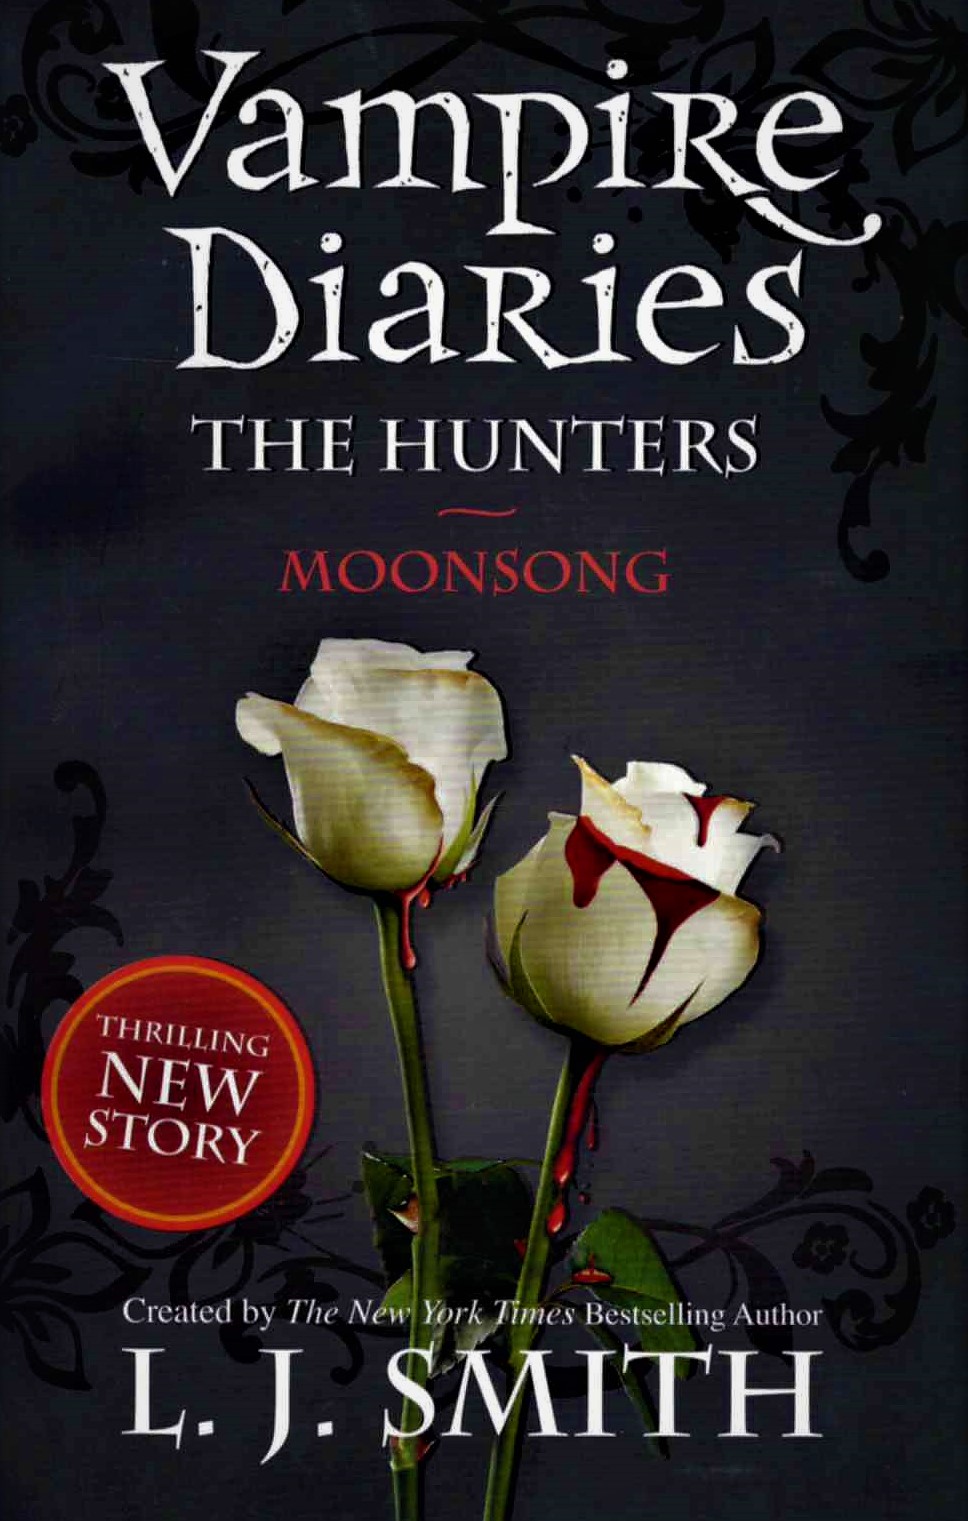 The Vampire Diaries: The Hunters. Moonsong